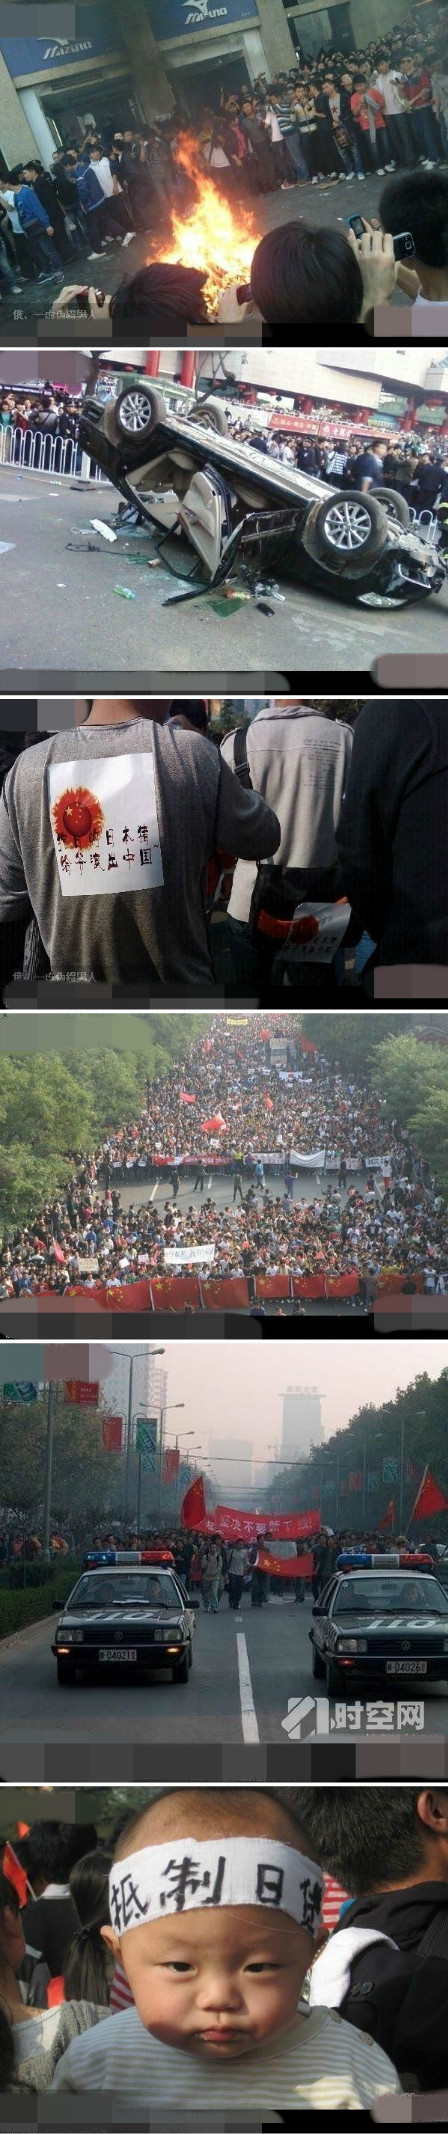 Weibo: Anti-Japan Protests